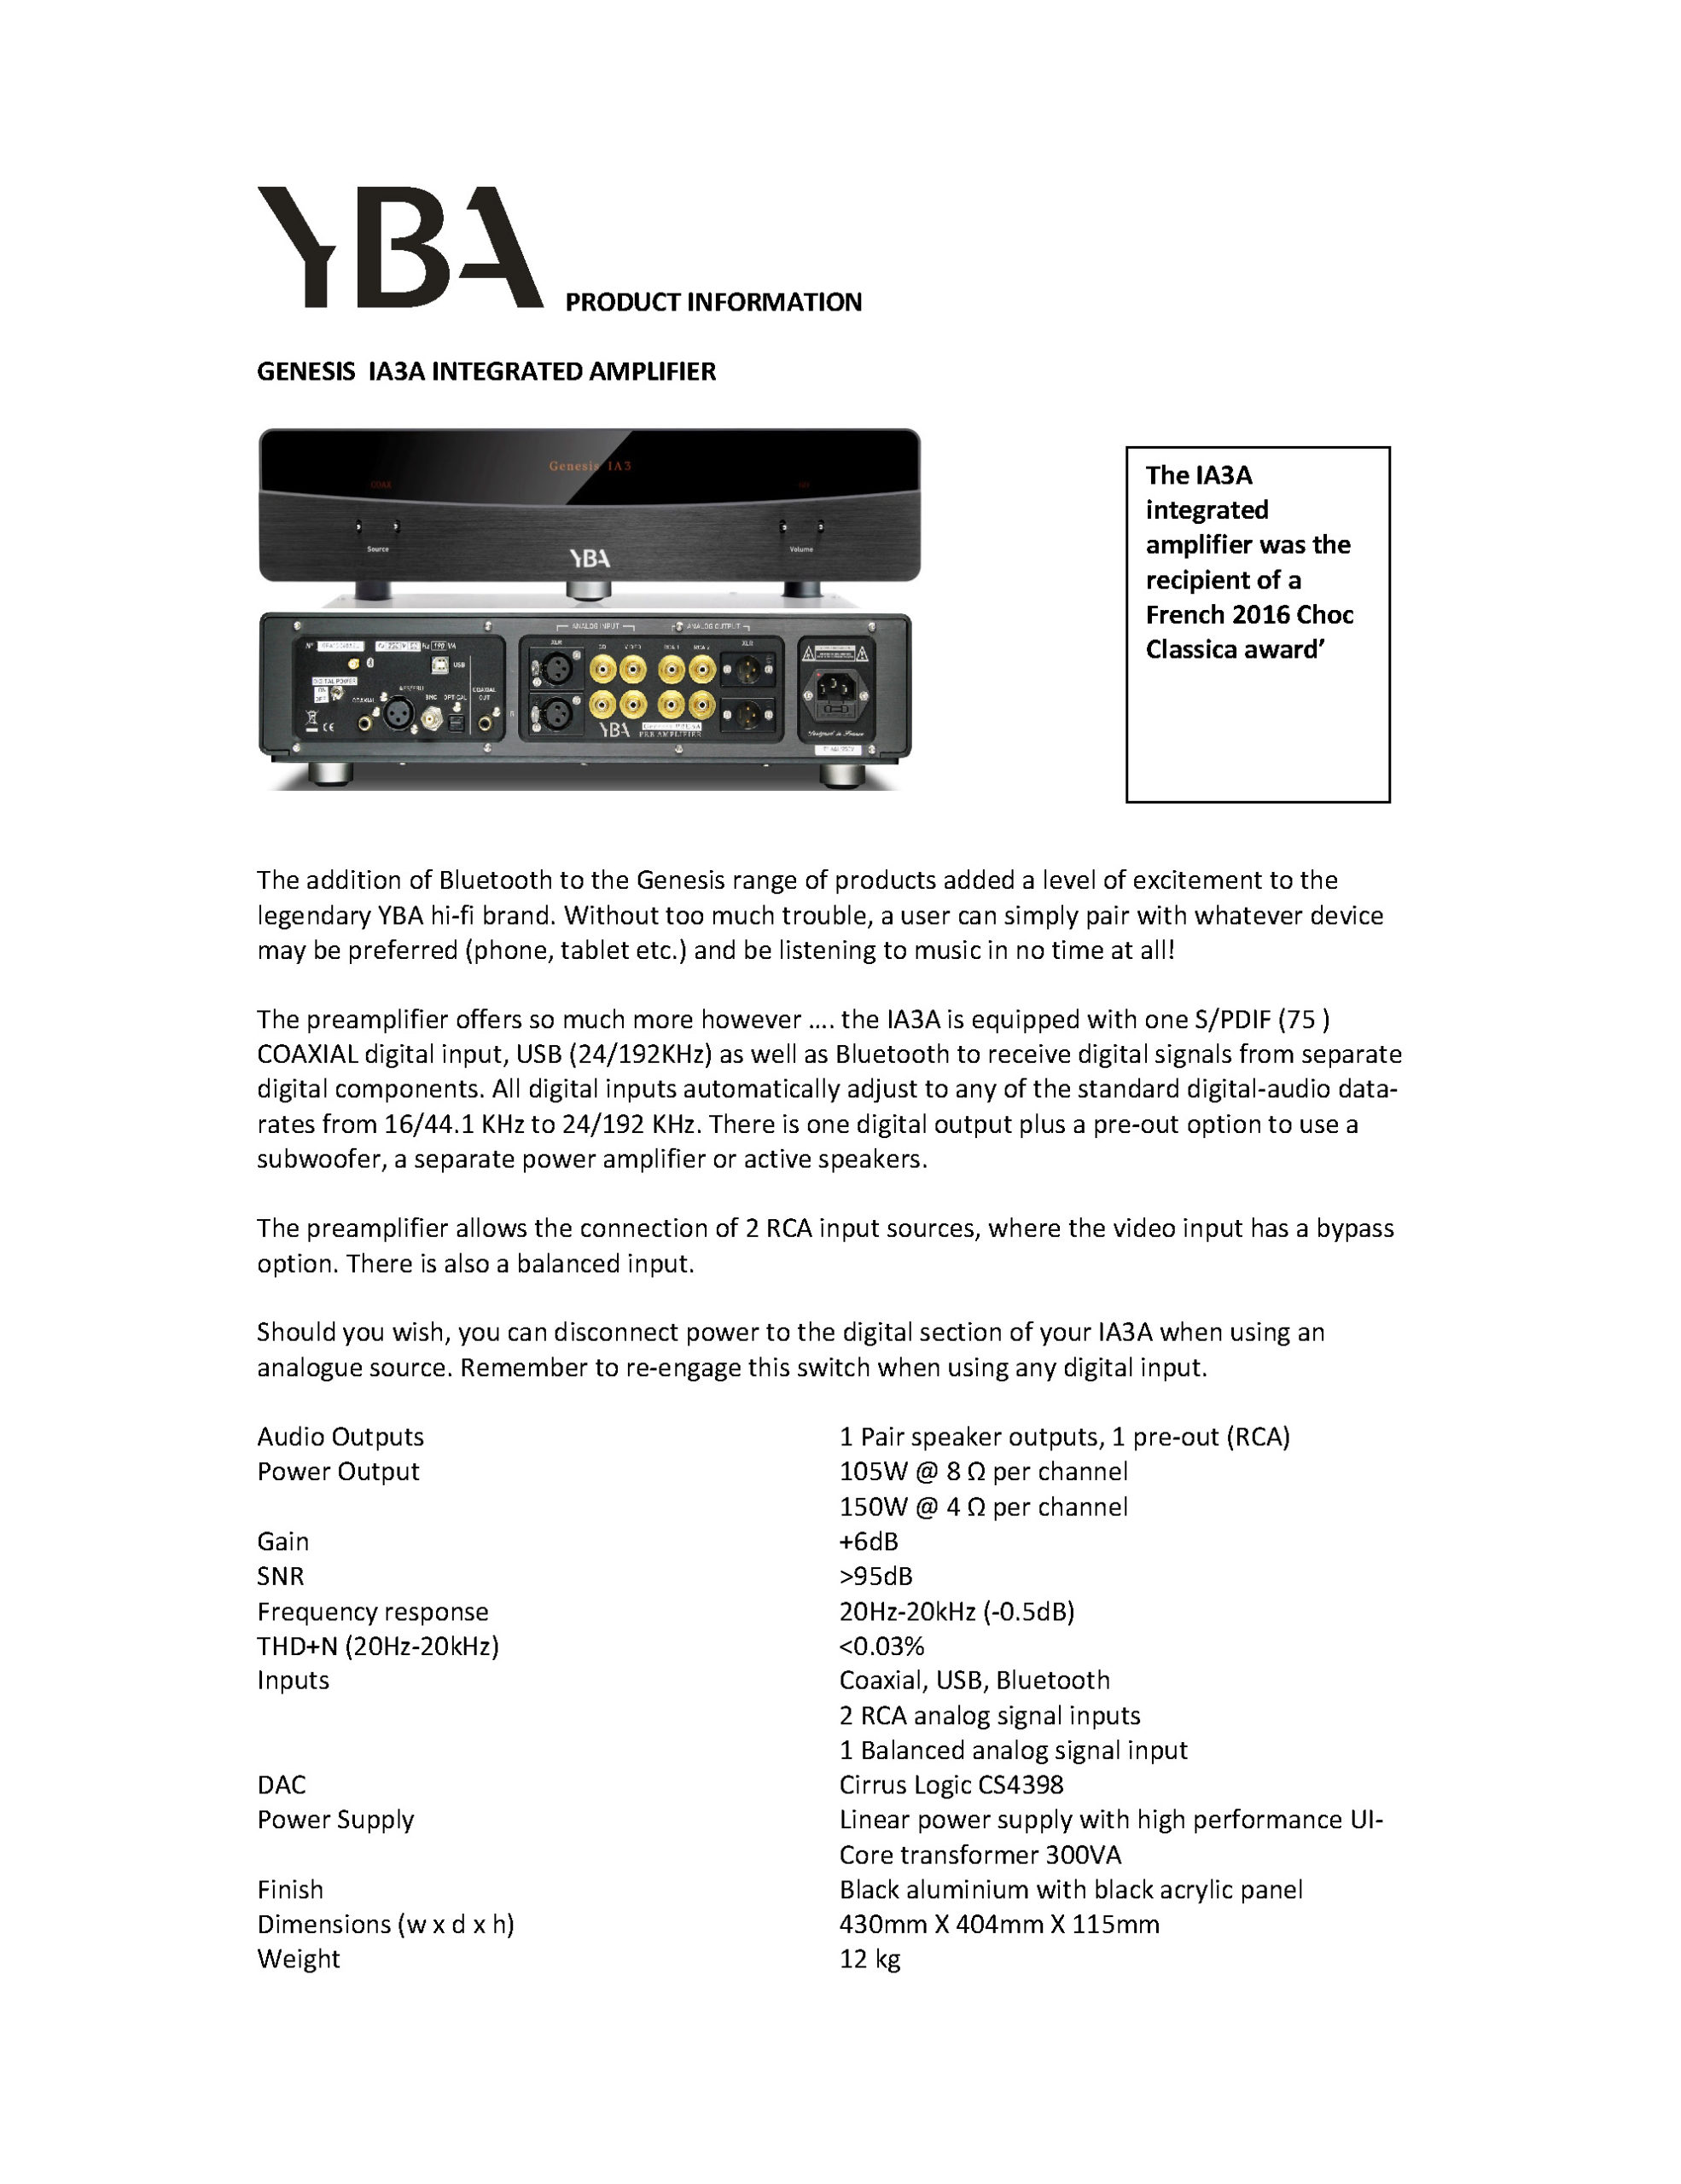 YBA Genesis IA3A Info Sheet - Norman Audio